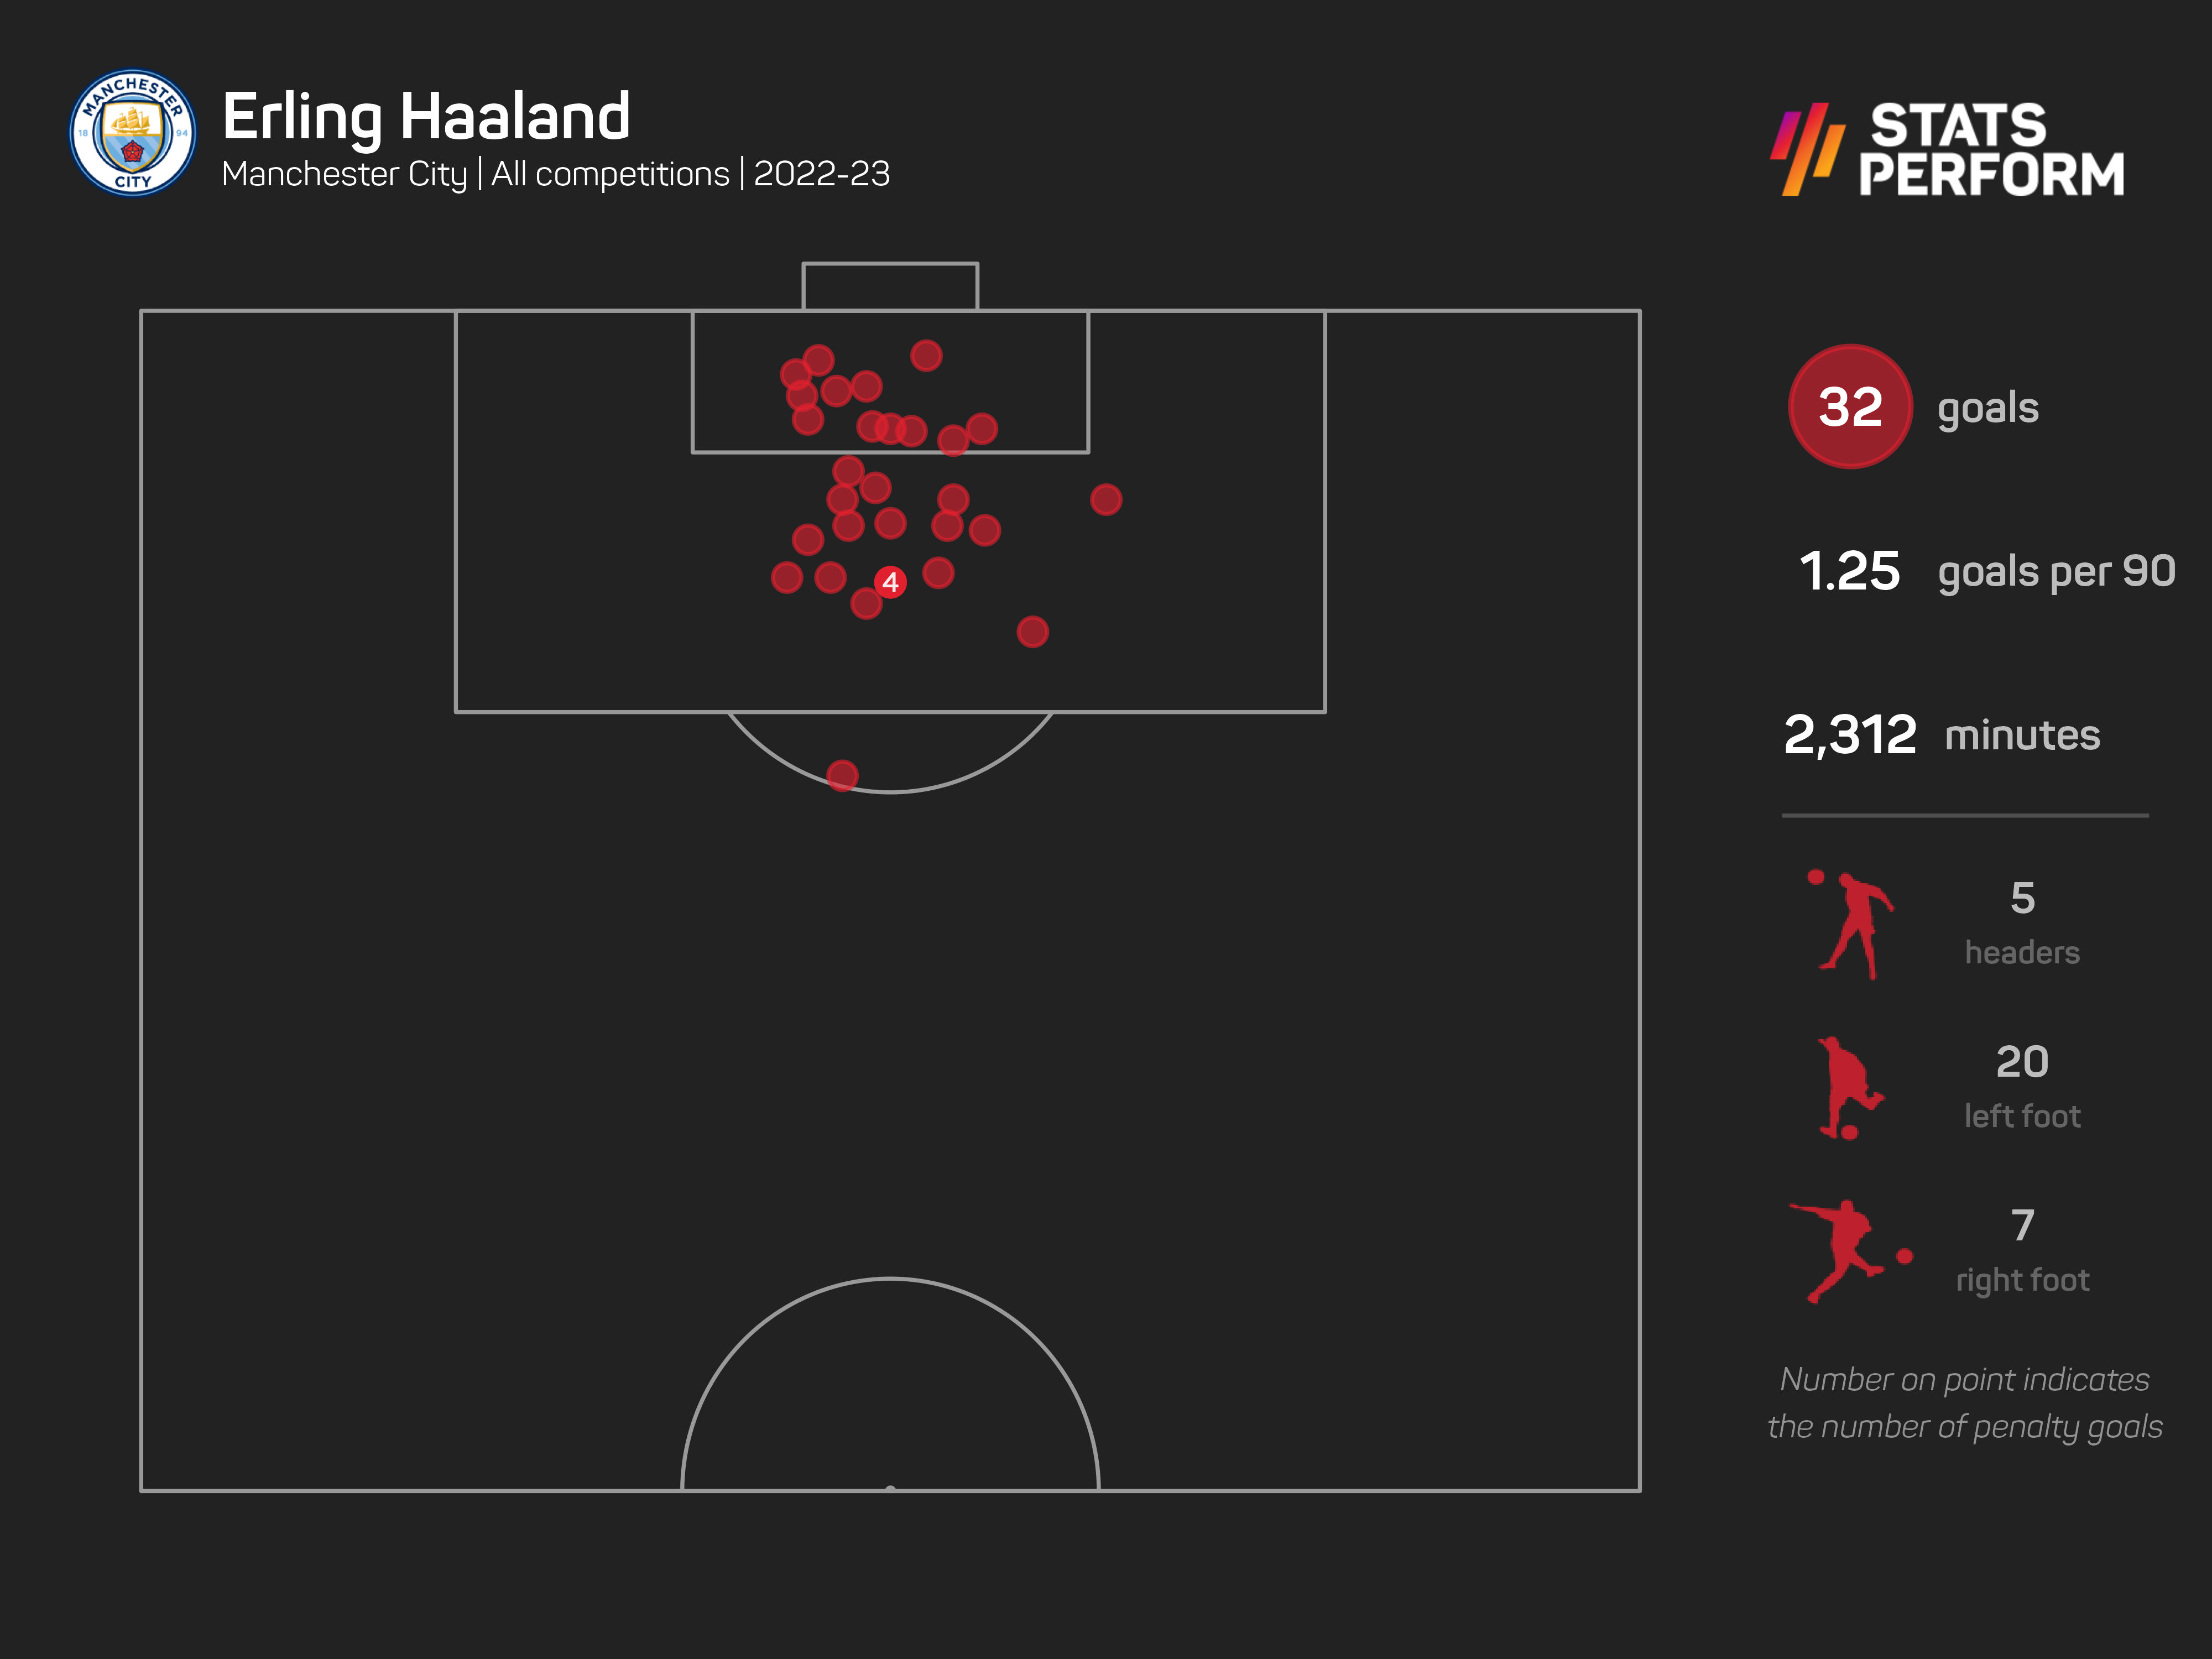 Erling Haaland has 32 goals this season